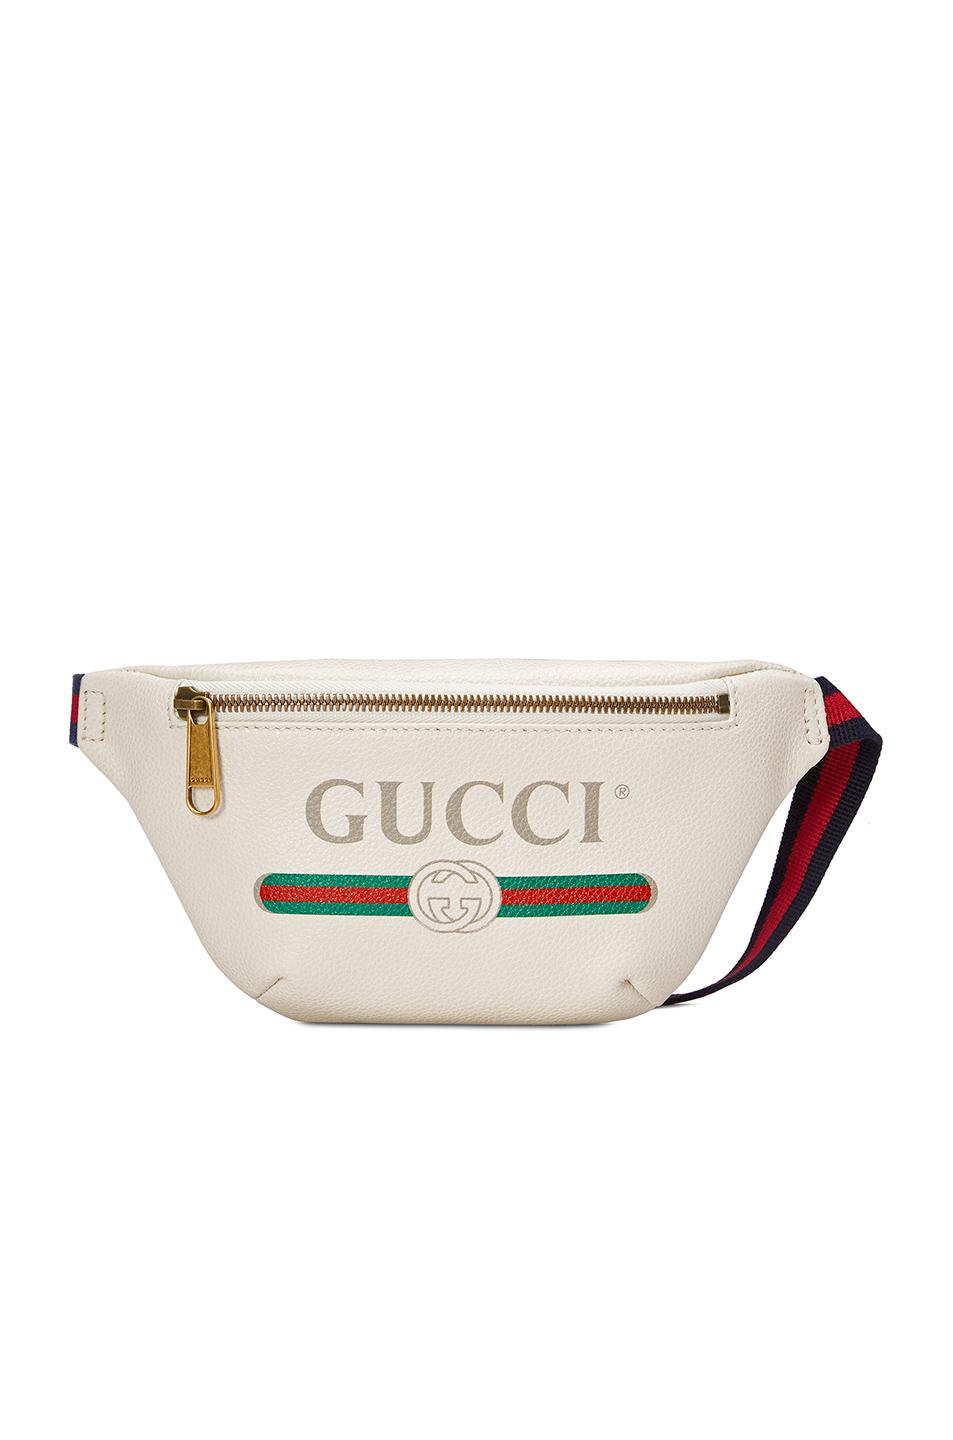 gucci small logo belt bag